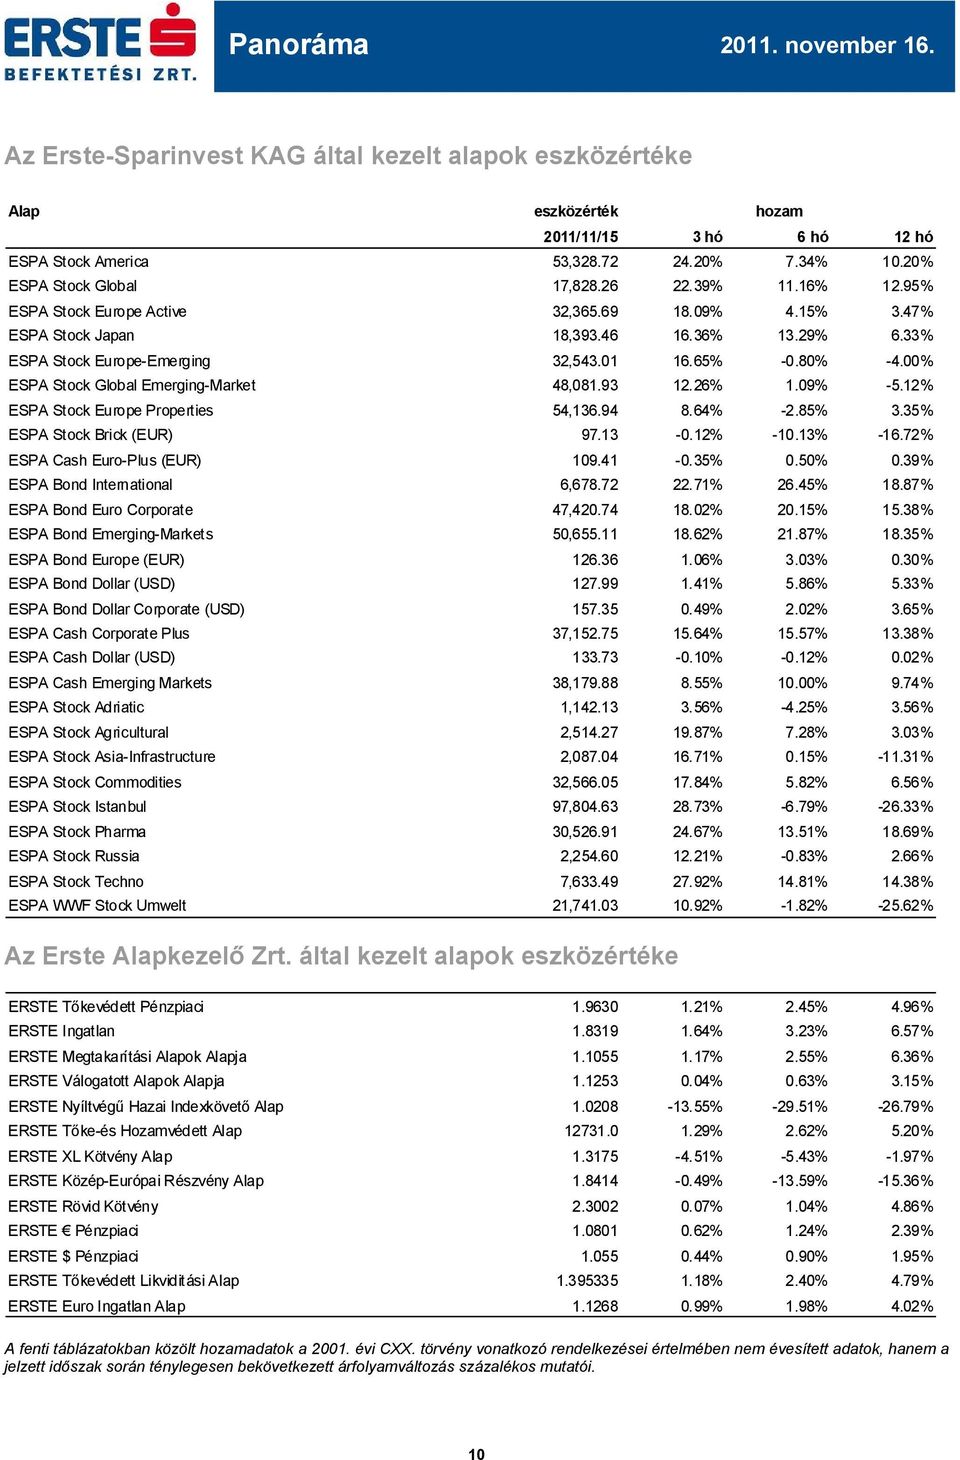 % ESPA Stock Global Emerging-Market 48,81.93 12.26% 1.9% -5.12% ESPA Stock Europe Properties 54,136.94 8.64% -2.85% 3.35% ESPA Stock Brick (EUR) 97.13 -.12% -1.13% -16.